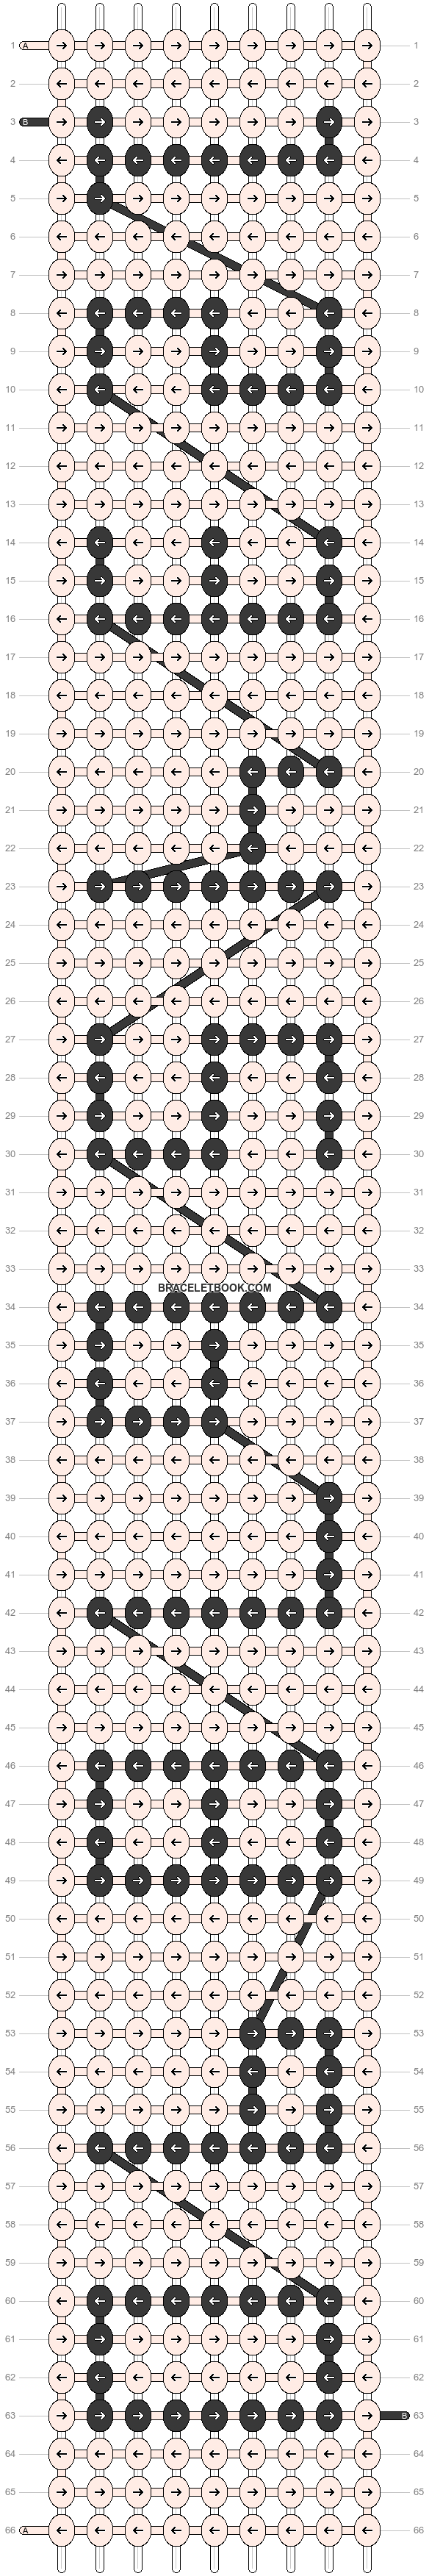 Alpha pattern #44579 variation #64723 pattern